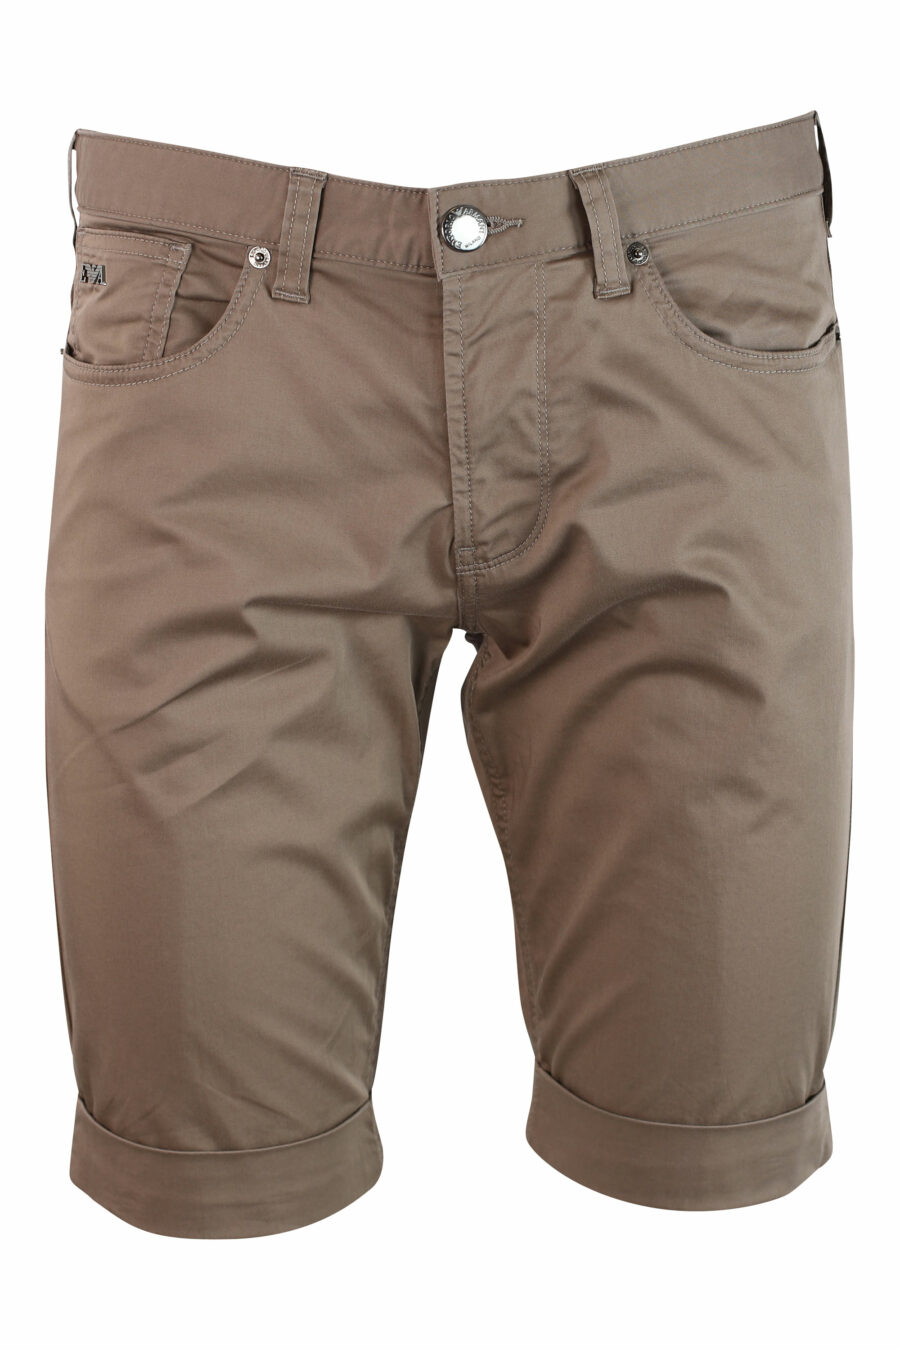 Pantalón corto beige con minilogo - IMG 9901 1